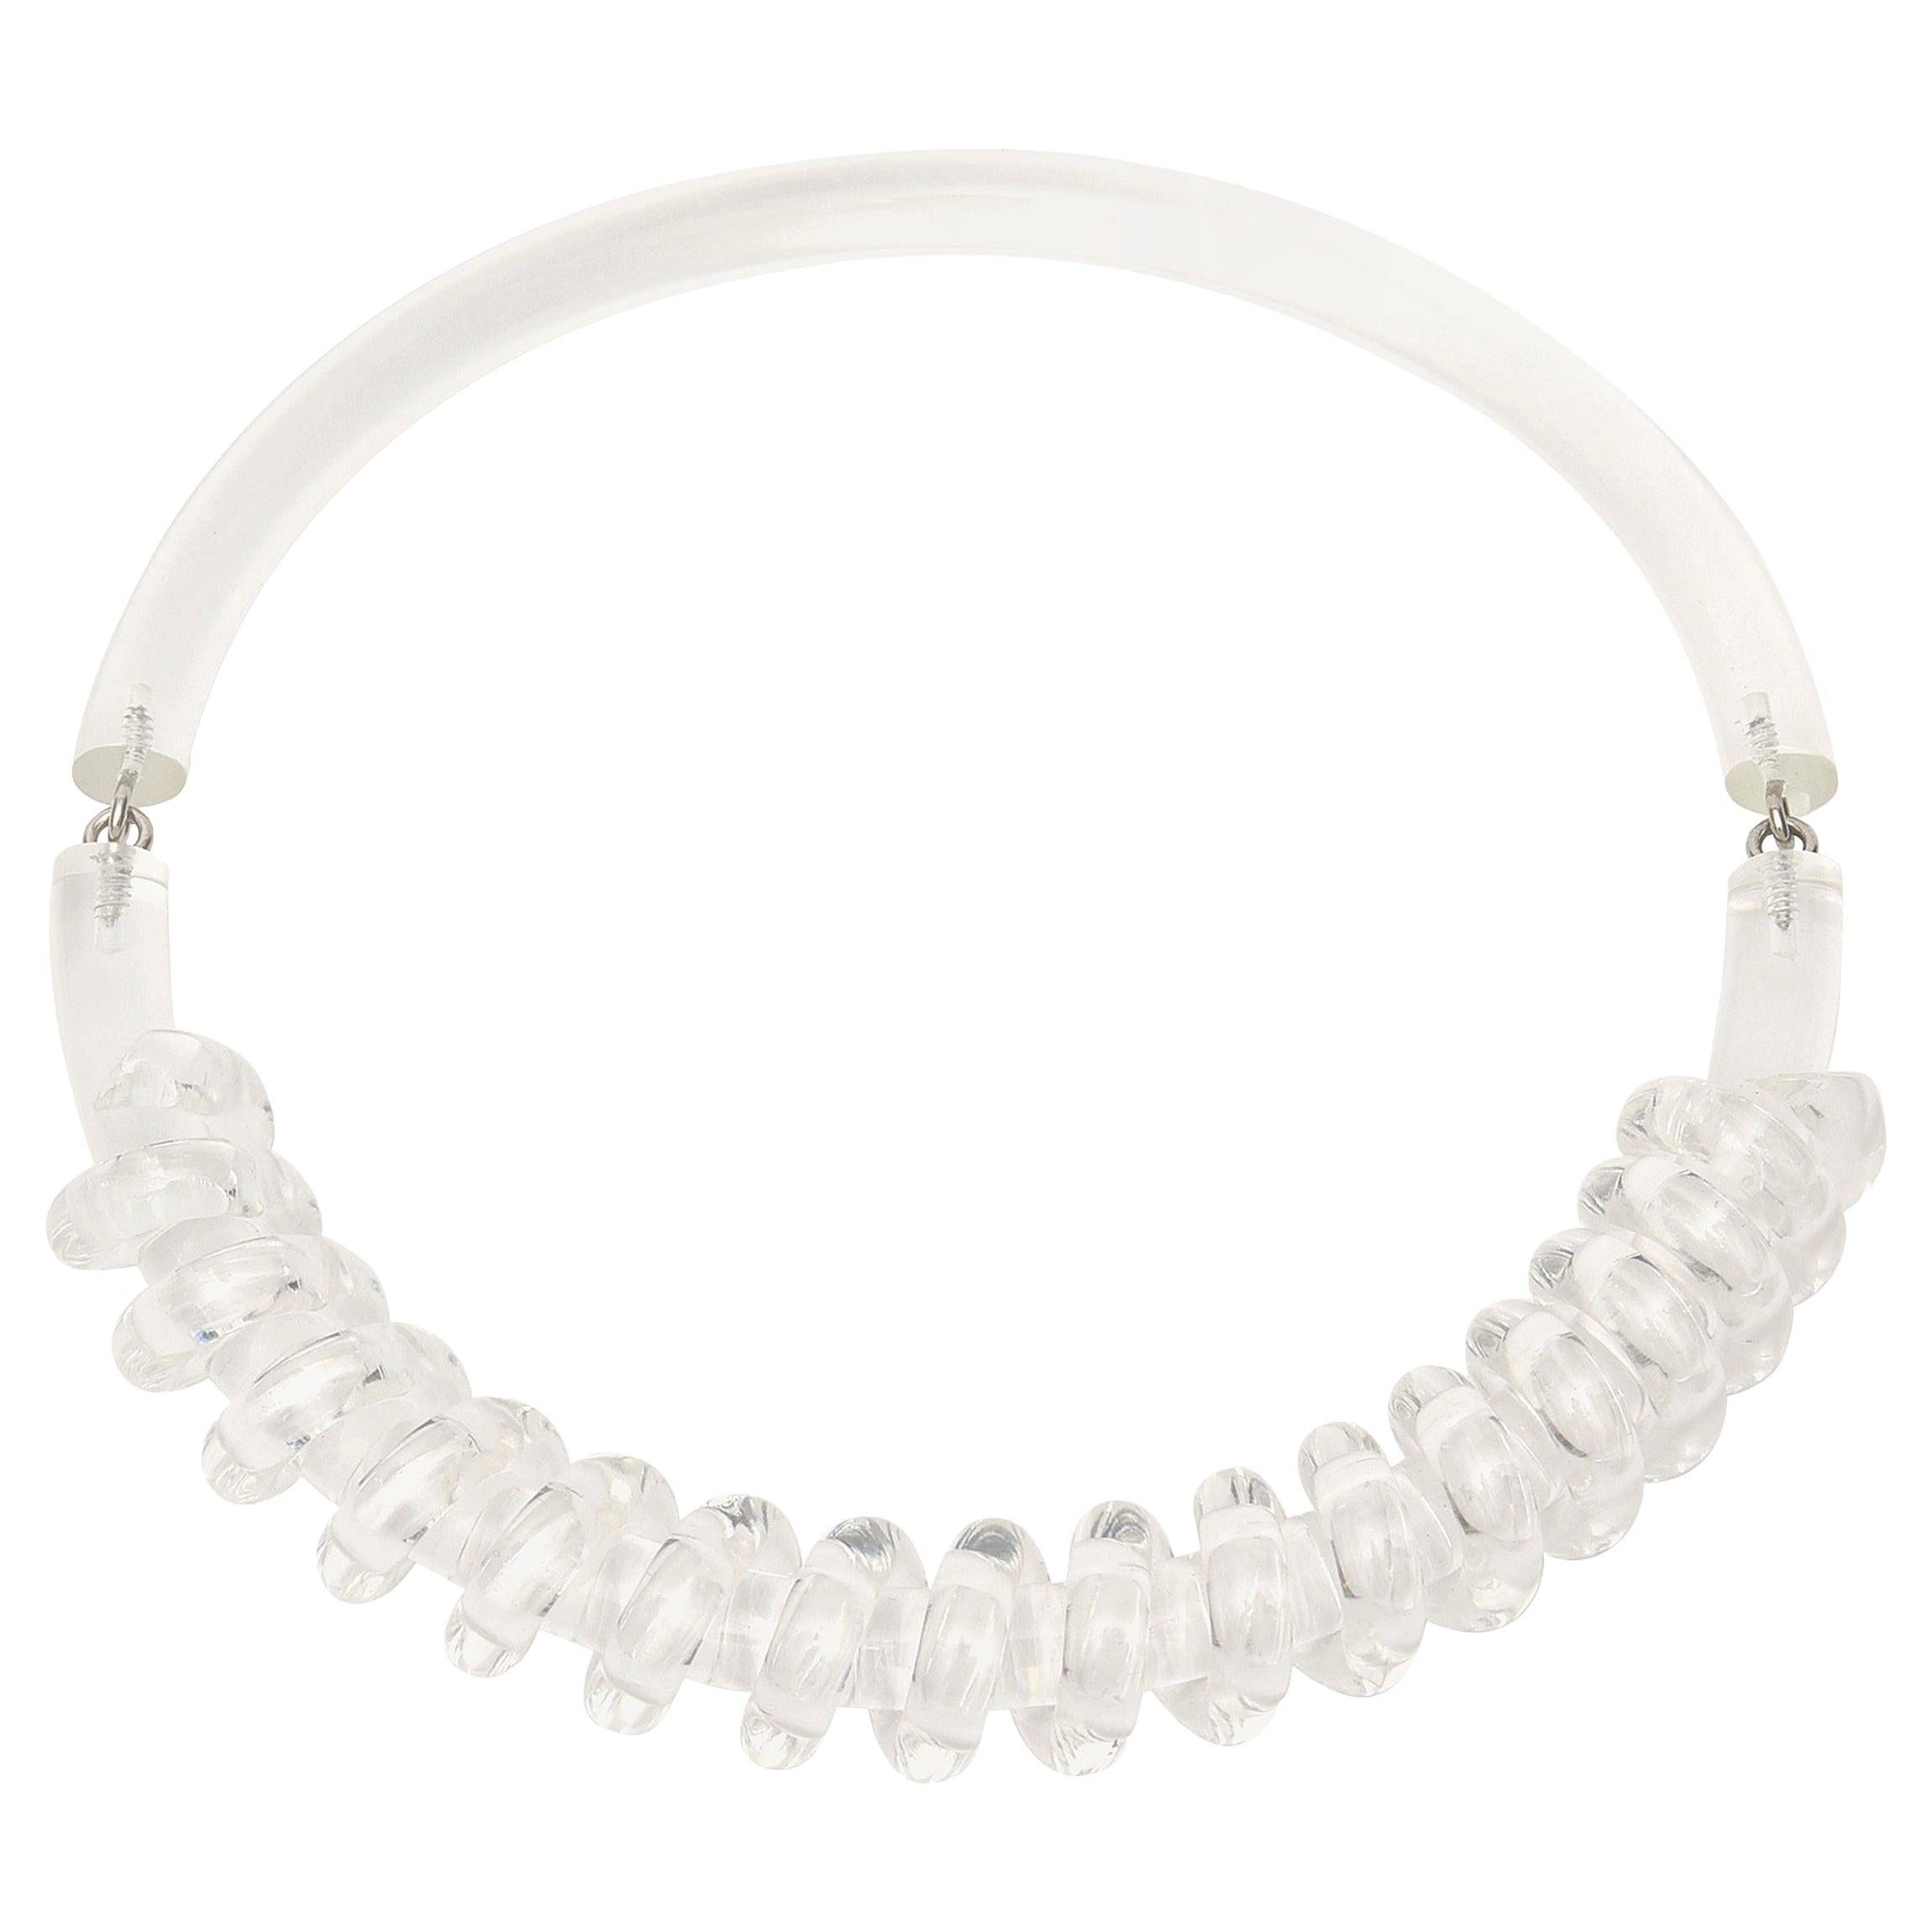 Judith Hendler Clear Lucite Spiral Sculptural Collar Necklace Vintage